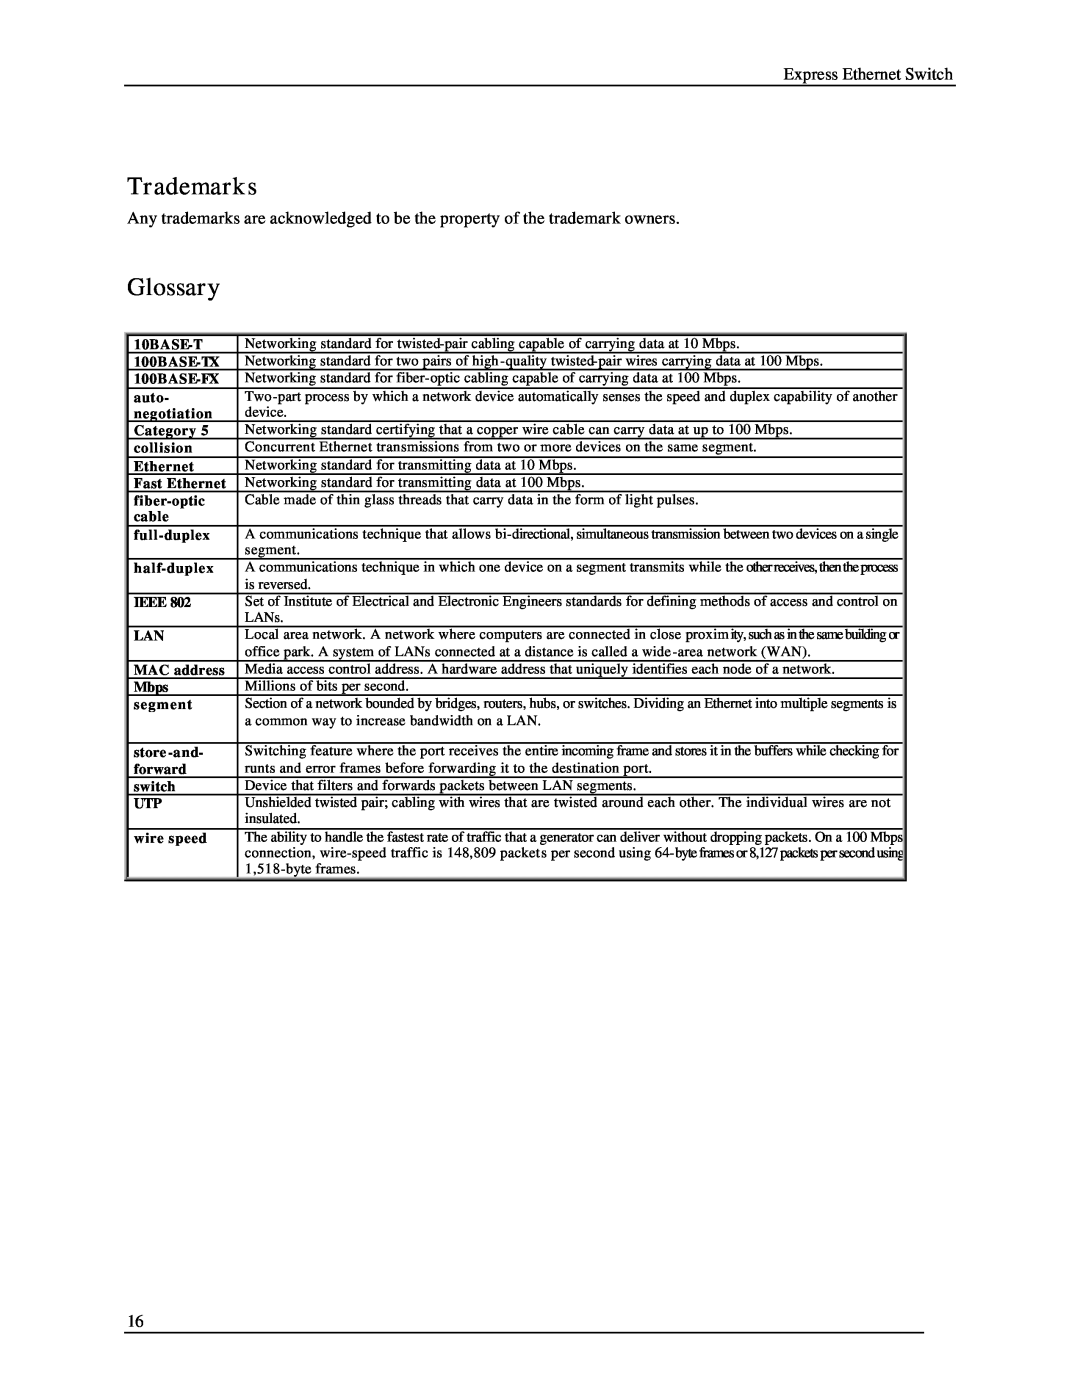 Black Box LB9002A-ST-R2 manual Trademarks, Glossary 